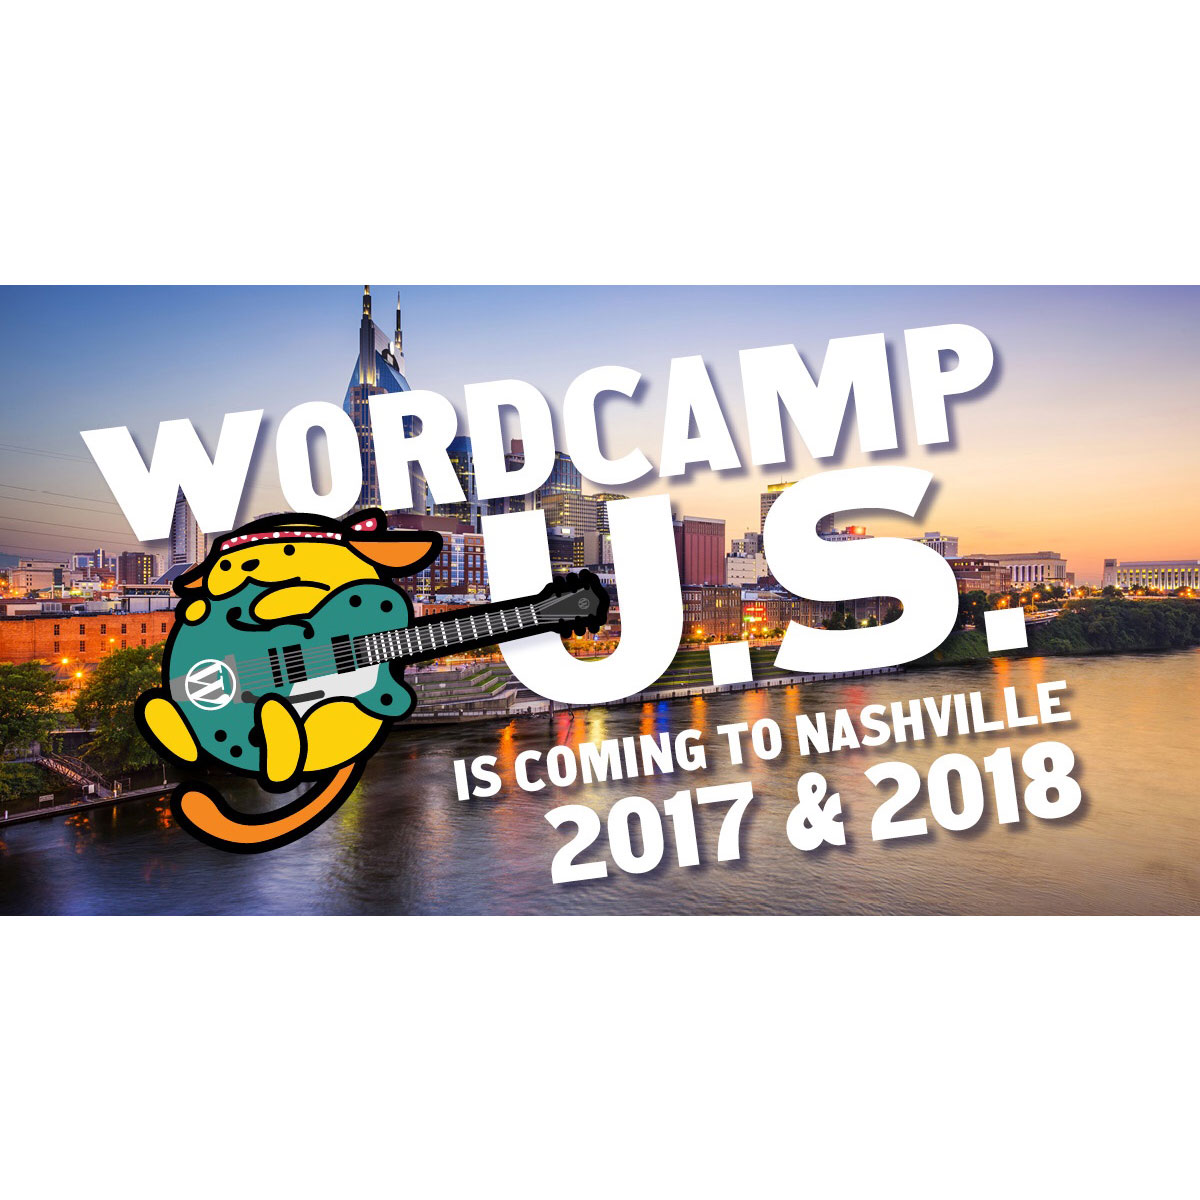 WordCamp US is coming Nashville 2017 & 2018